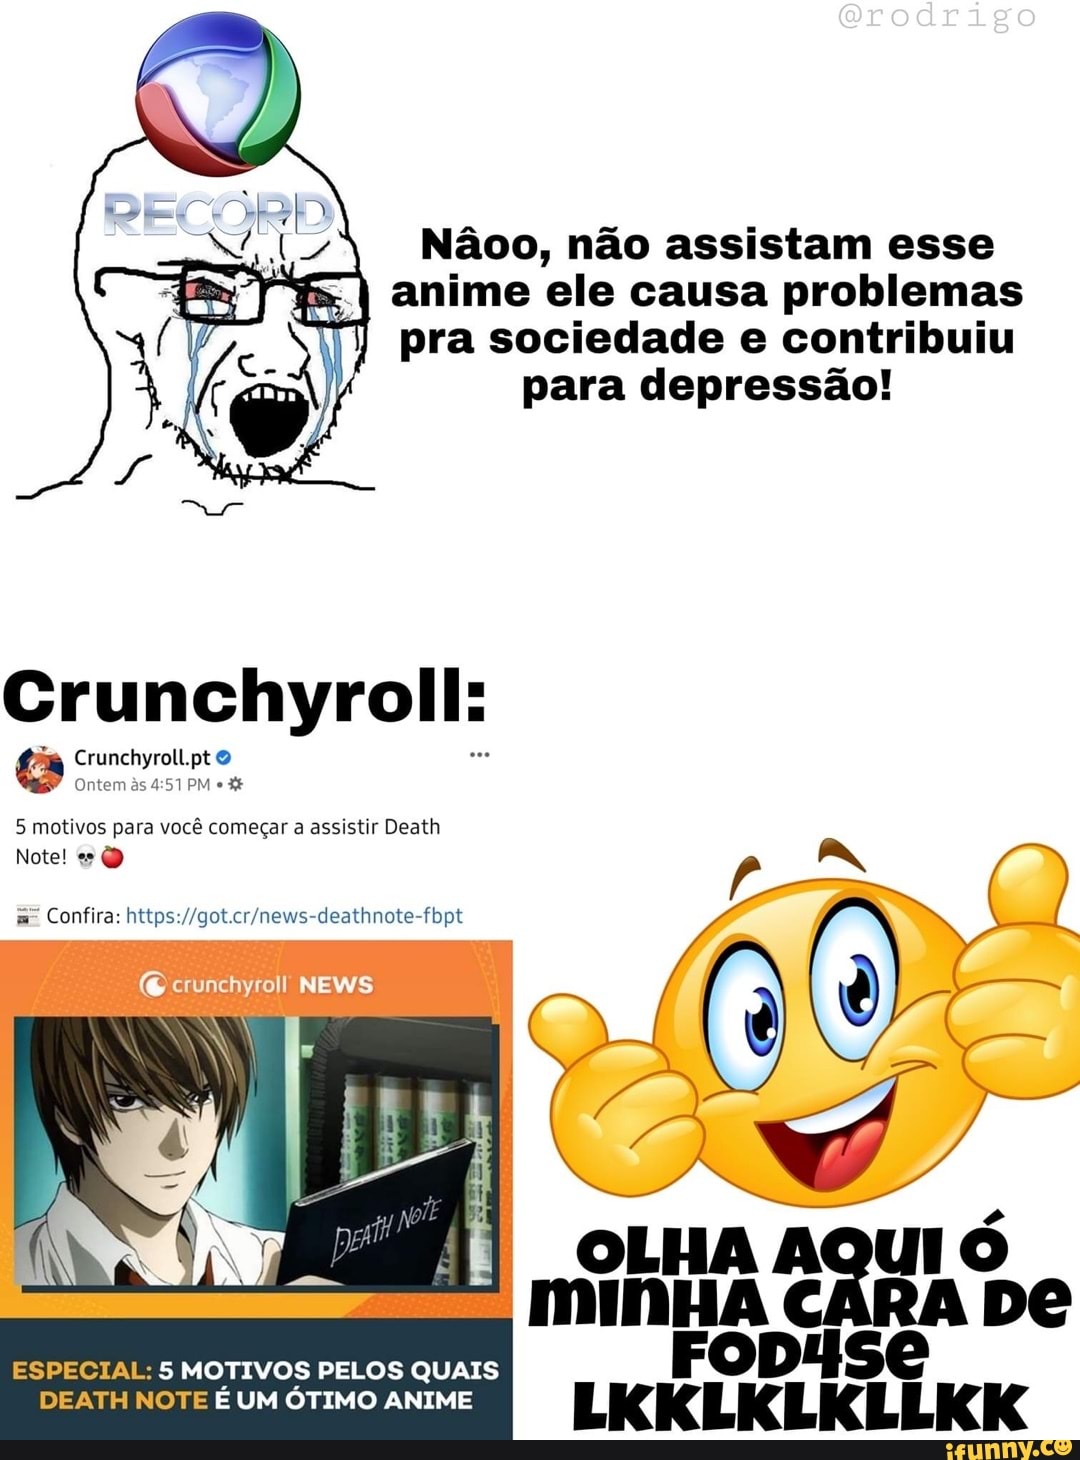 Death Note em português brasileiro - Crunchyroll